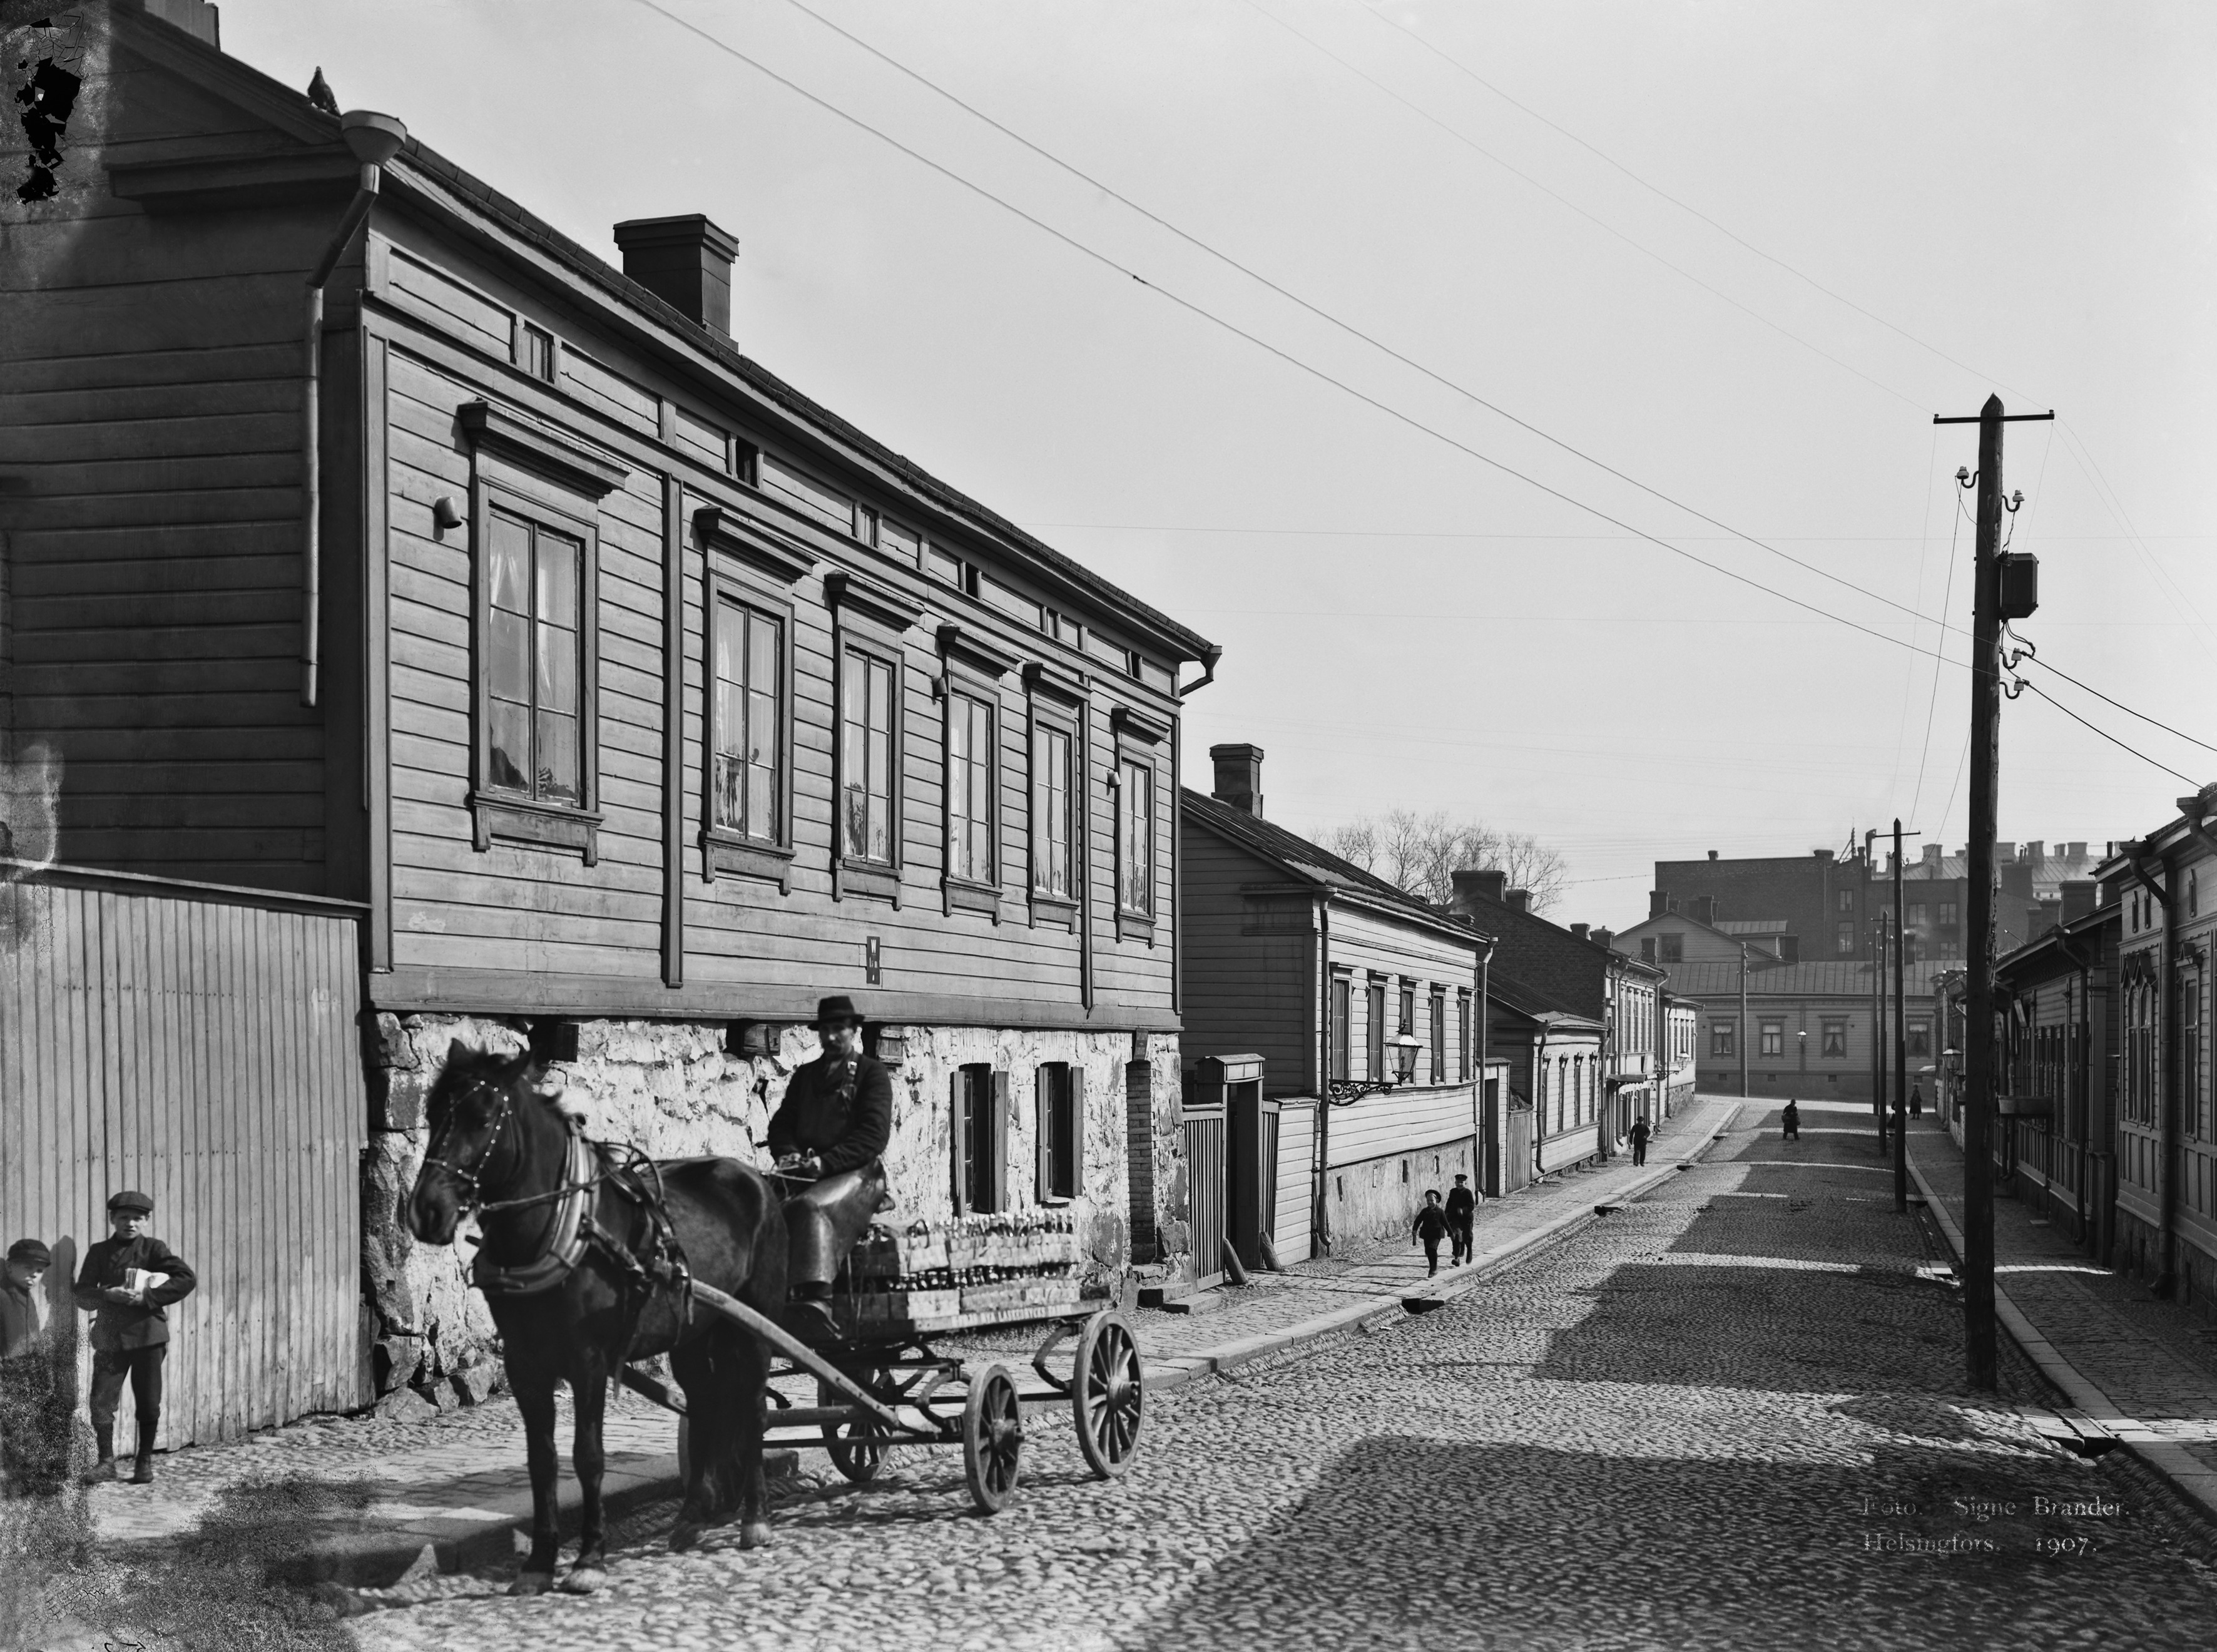 Jääkärinkatu 9, 7, 5. Helsingfors Nya Läskdrycksfabrikin kuorma-ajuri kadulla.